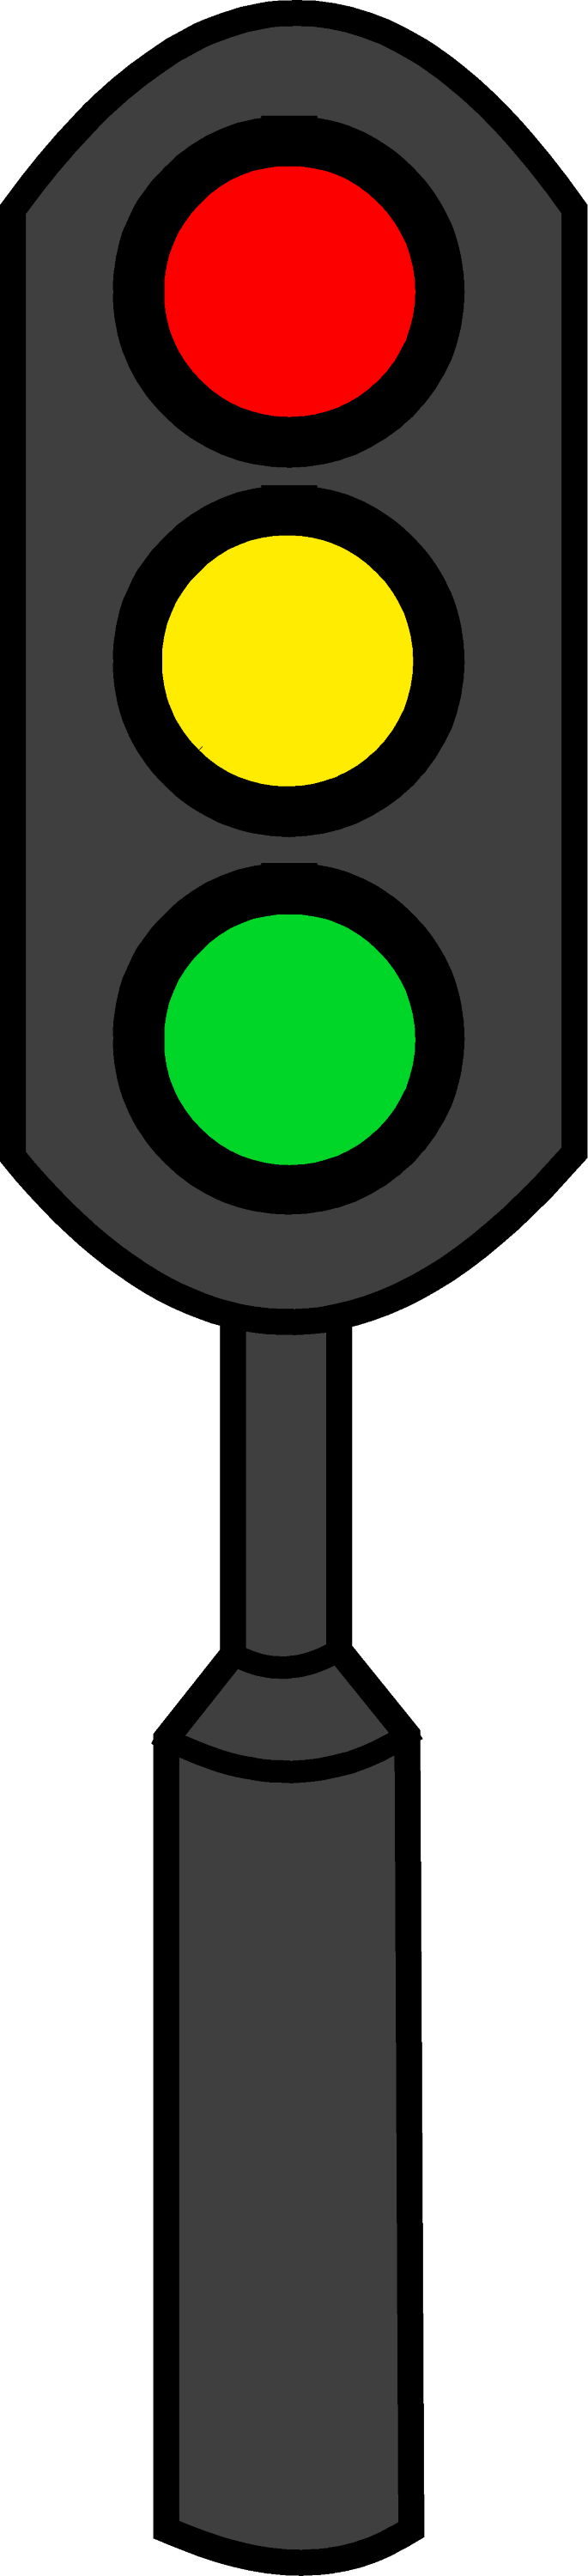 clipart traffic light green - photo #34